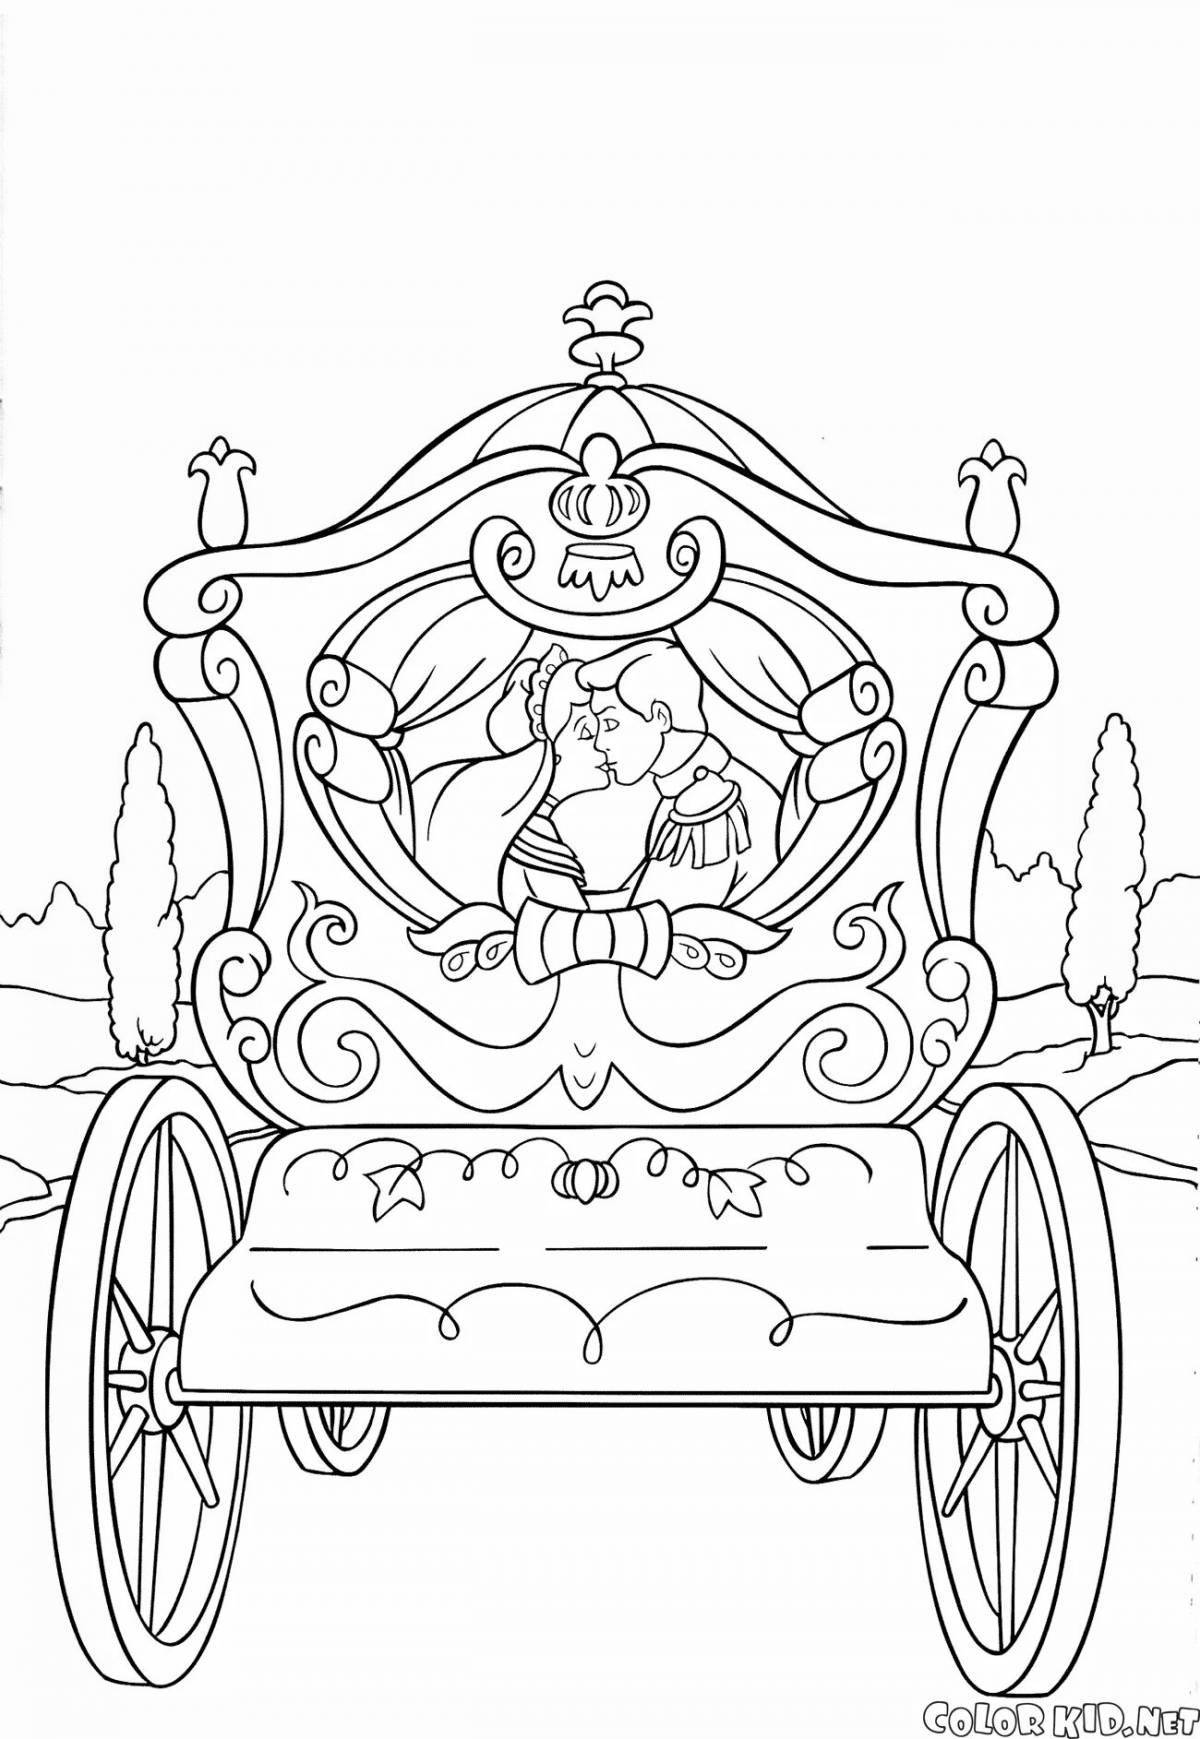 Cinderella's ornamental carriage coloring page